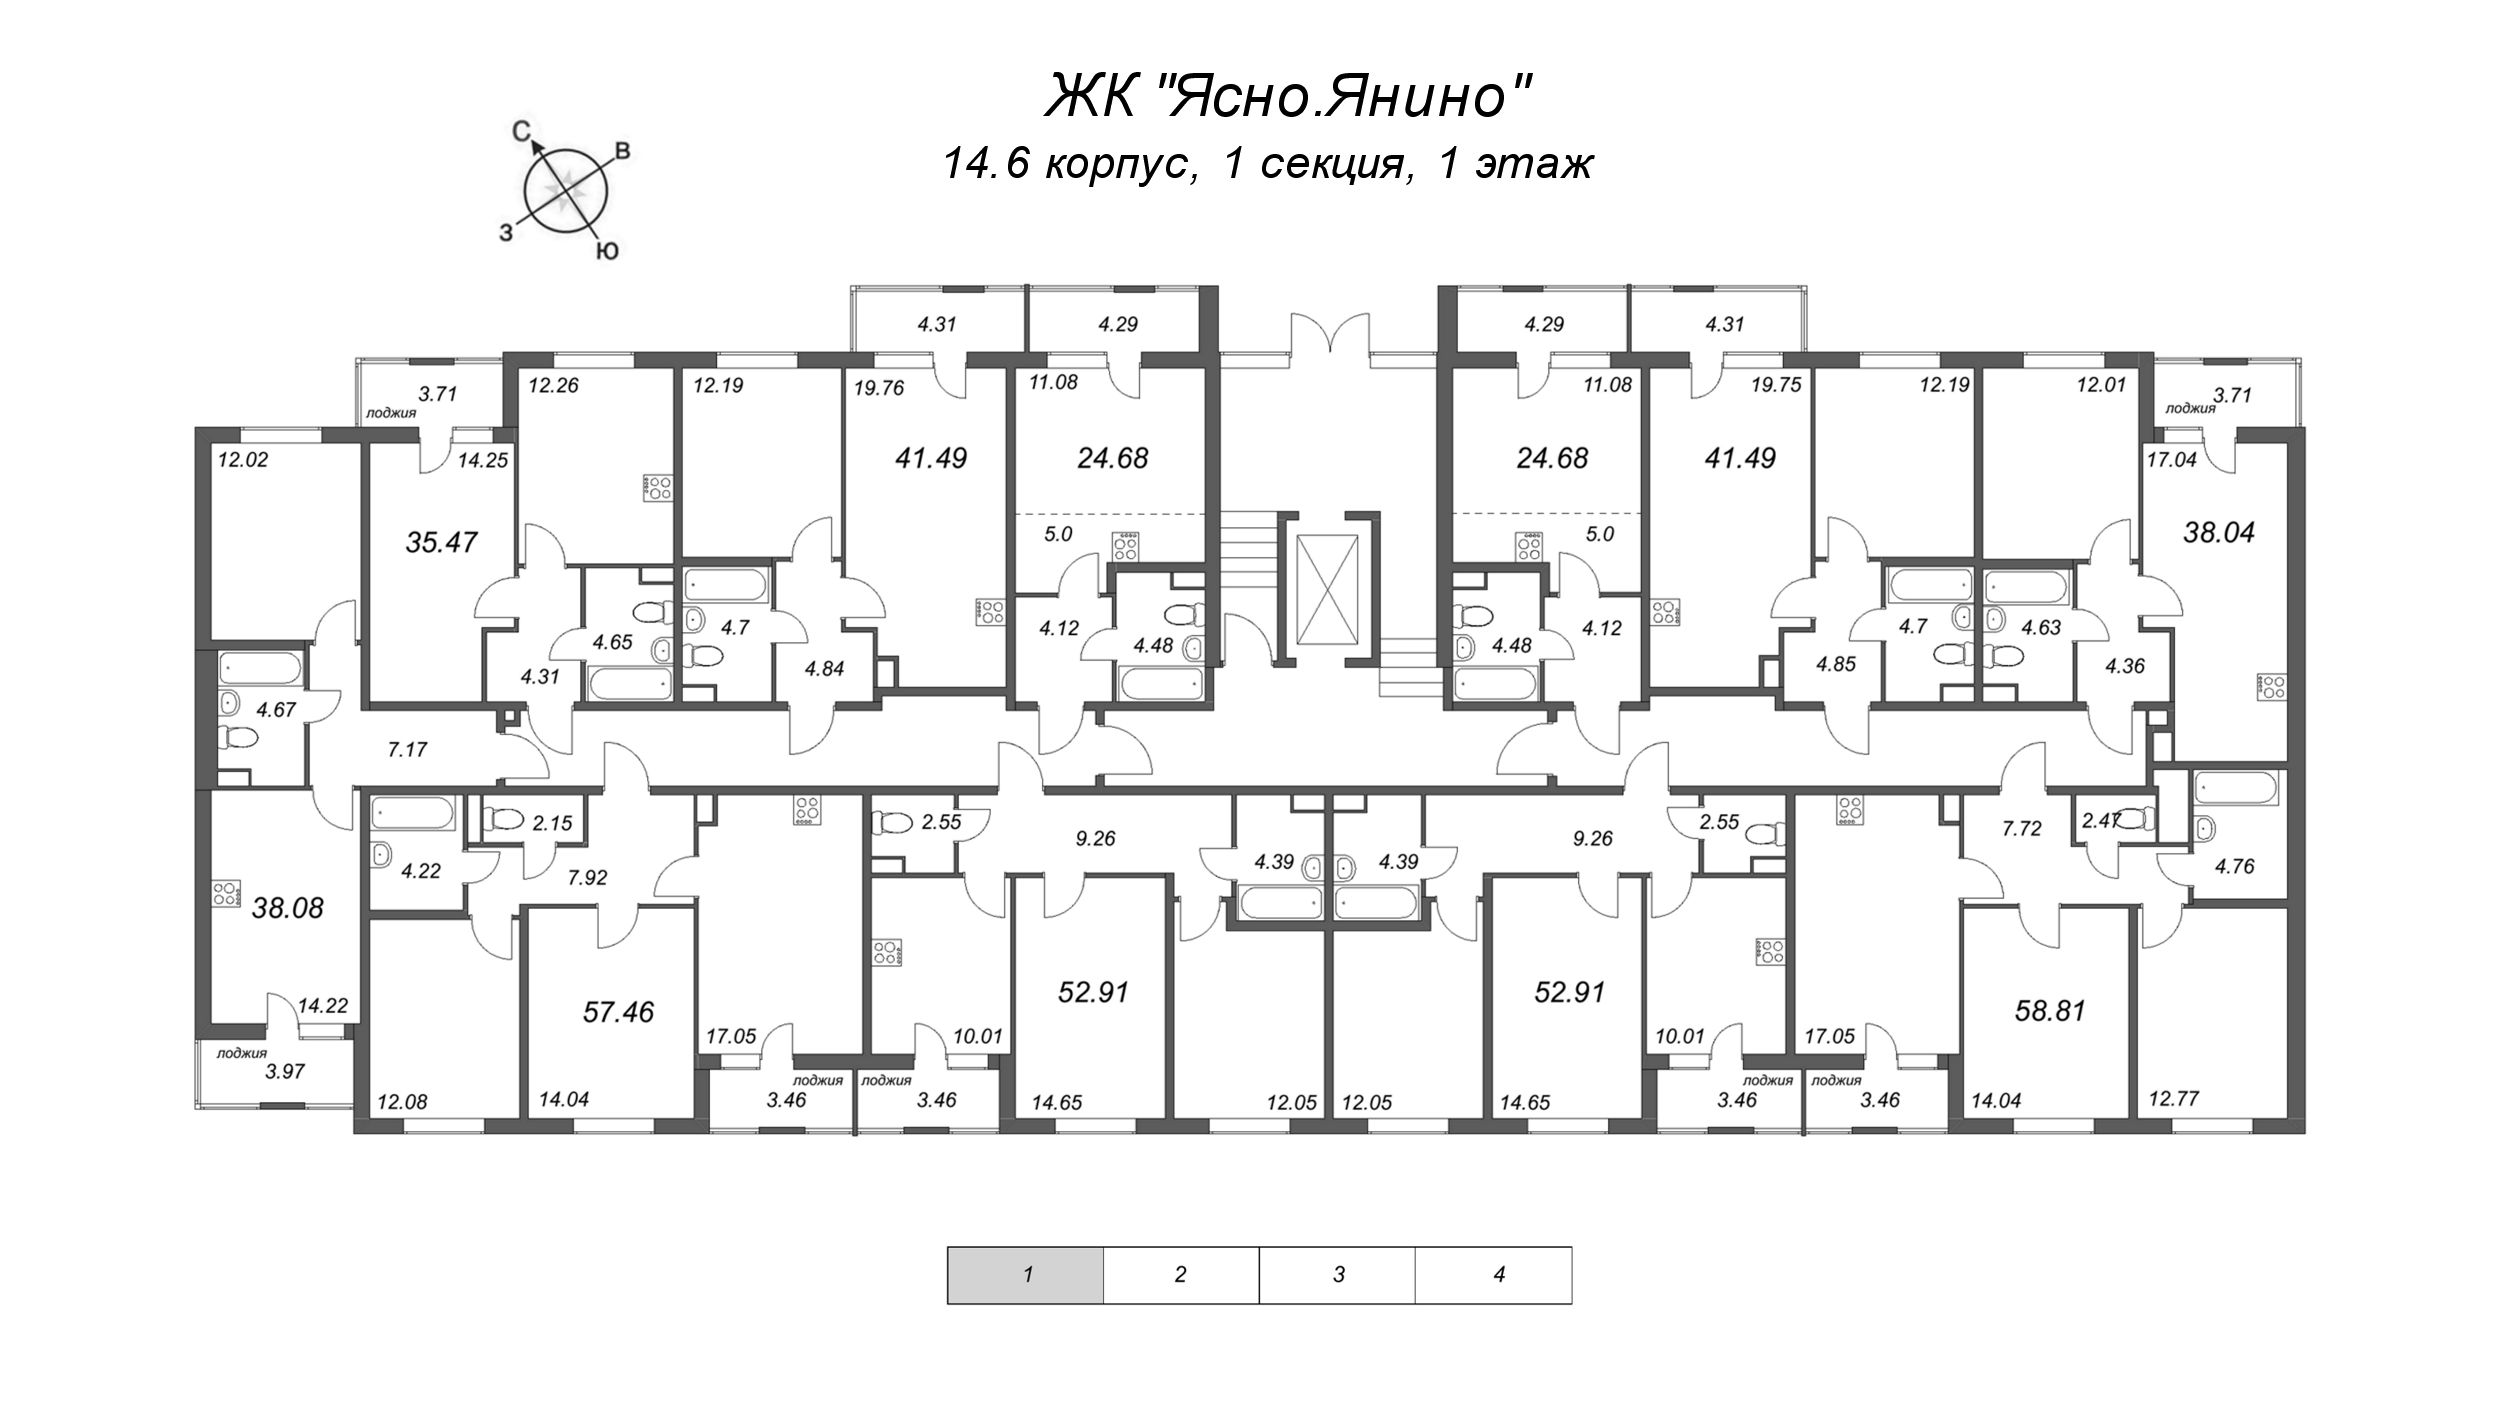 2-комнатная (Евро) квартира, 38.04 м² - планировка этажа